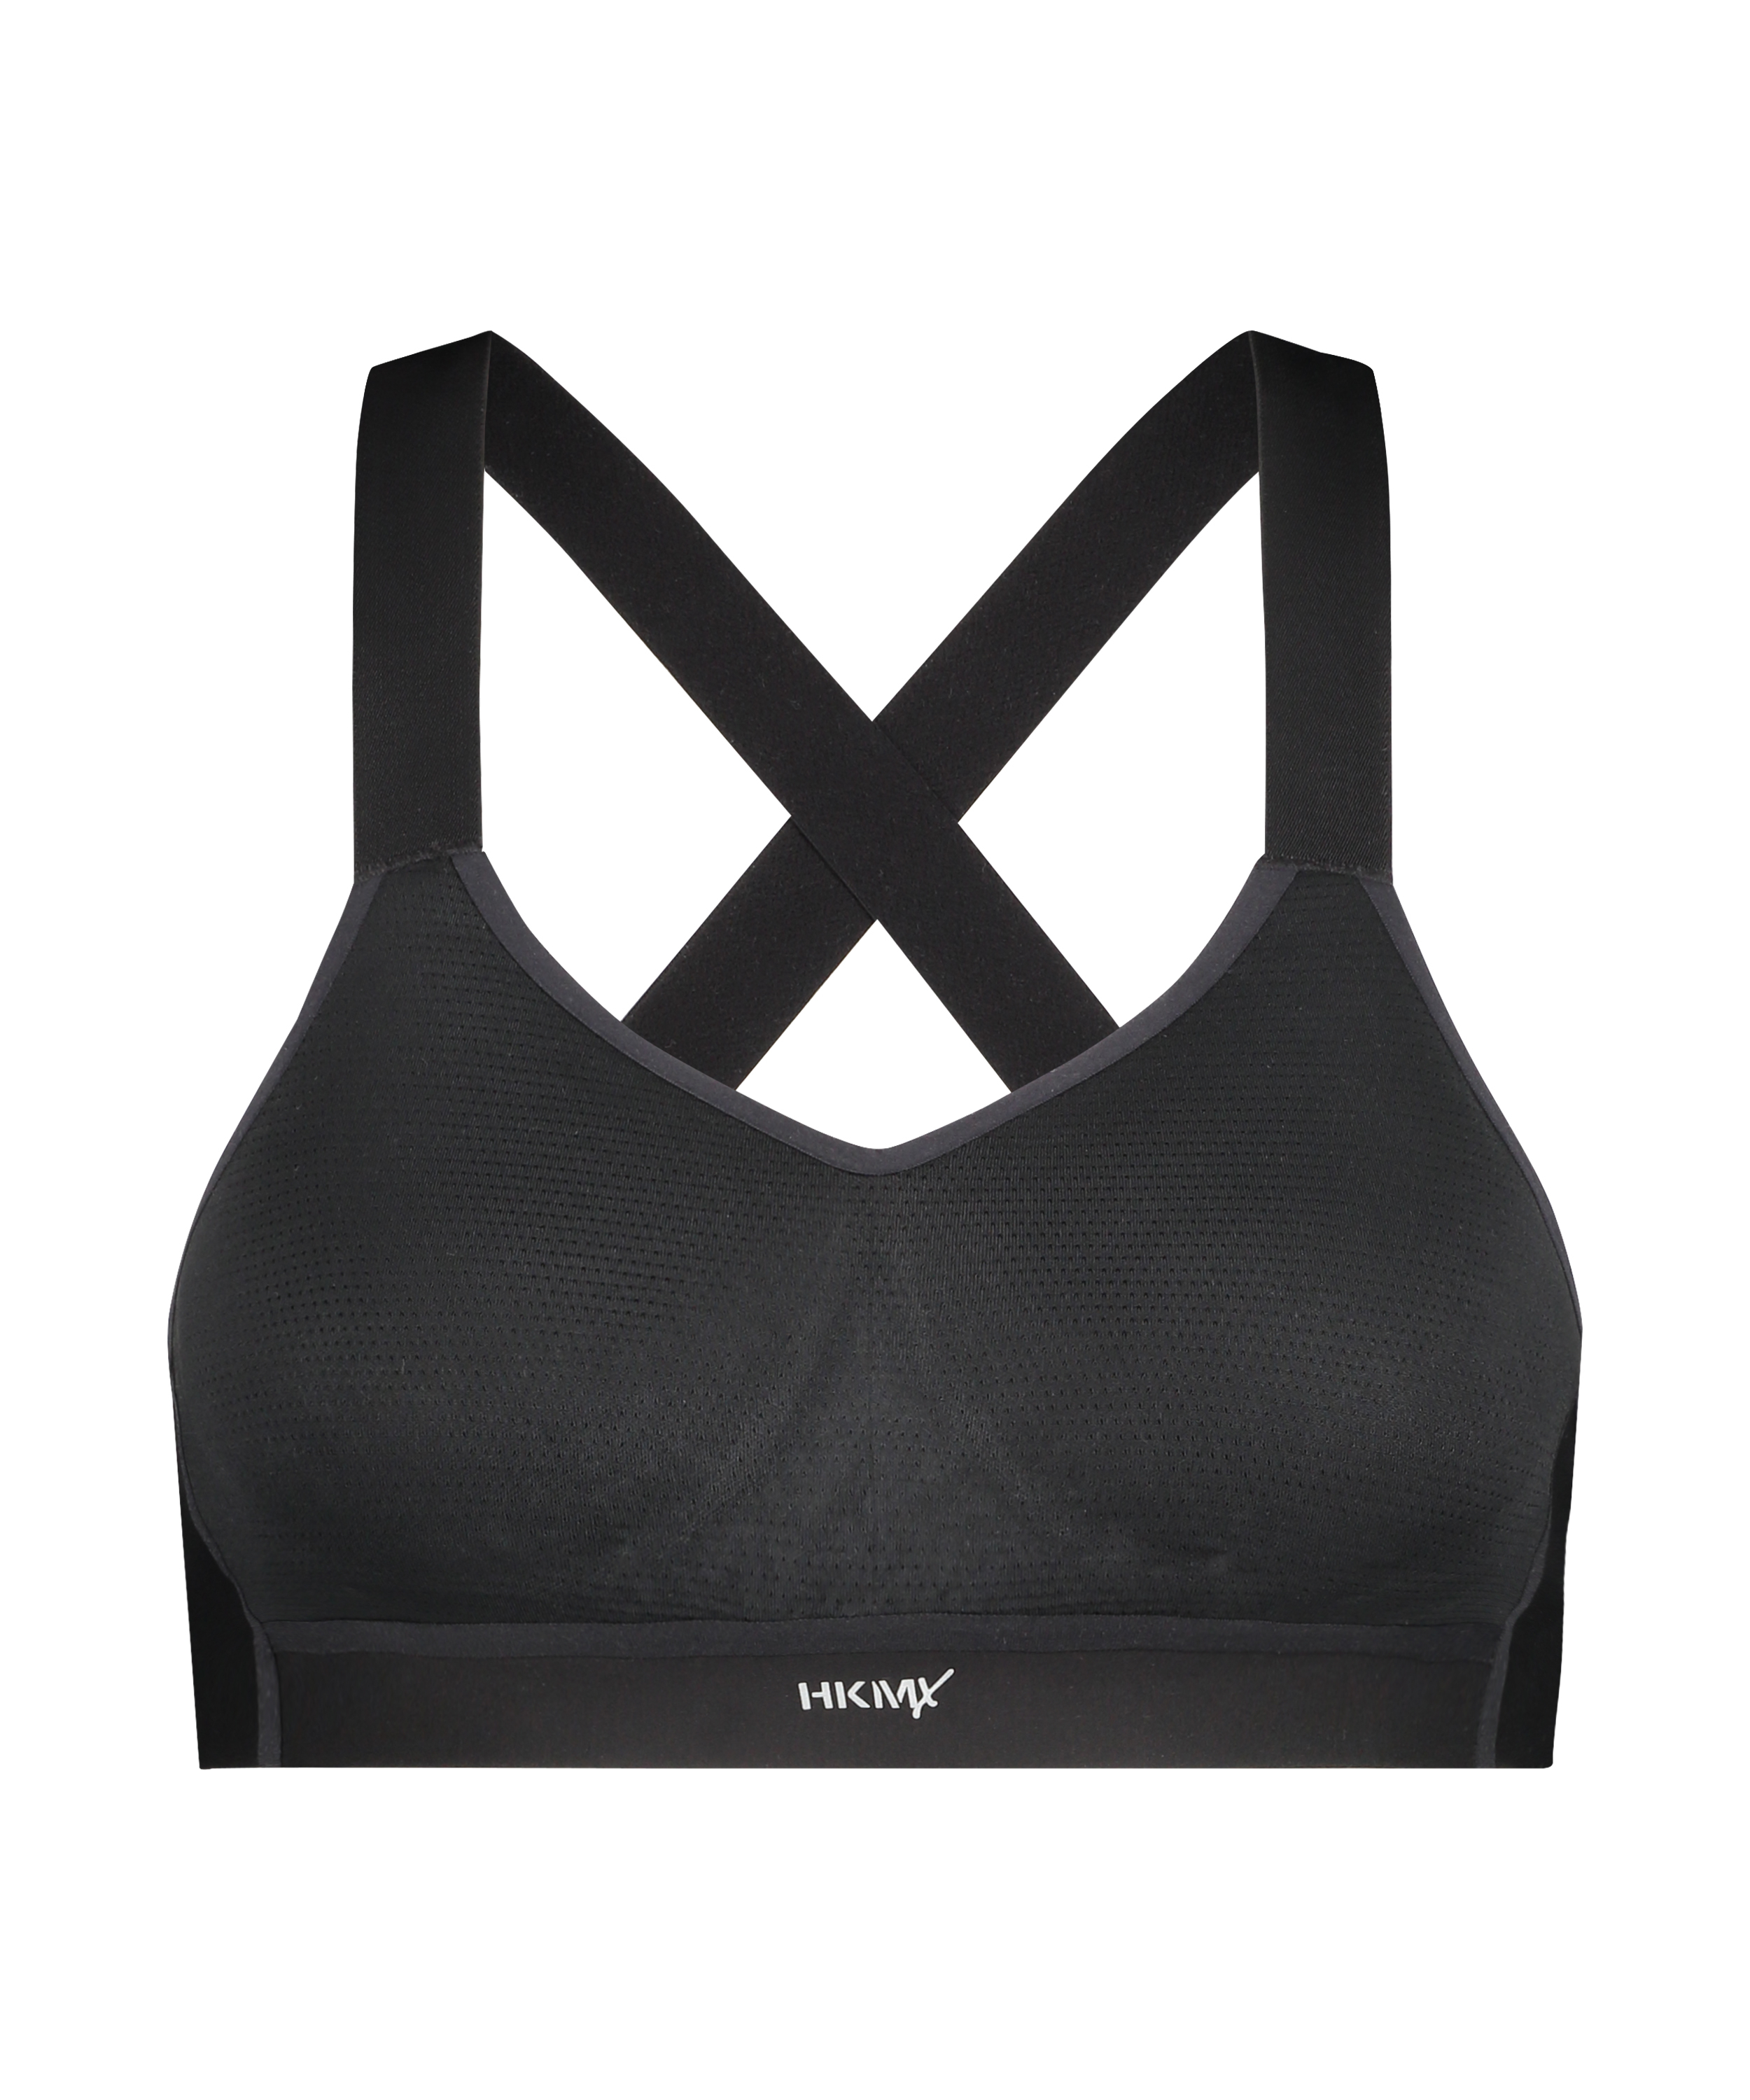 HKMX The Infinity sports bra level 2, Black, main